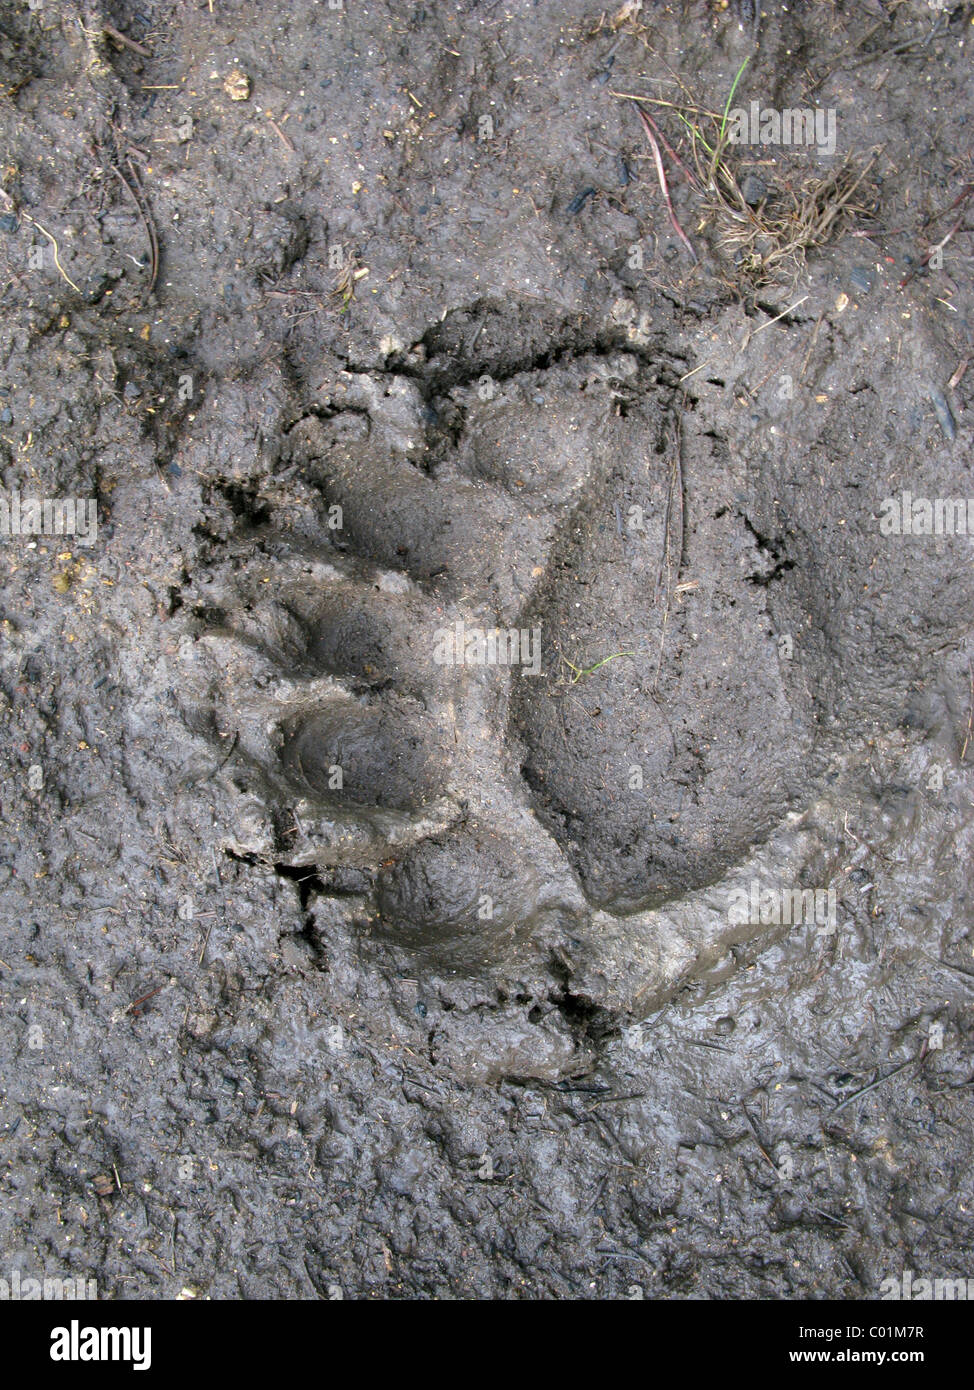 Footprint, American black bear (Ursus americanus), Yellowstone National Park, Wyoming, USA, North America Stock Photo